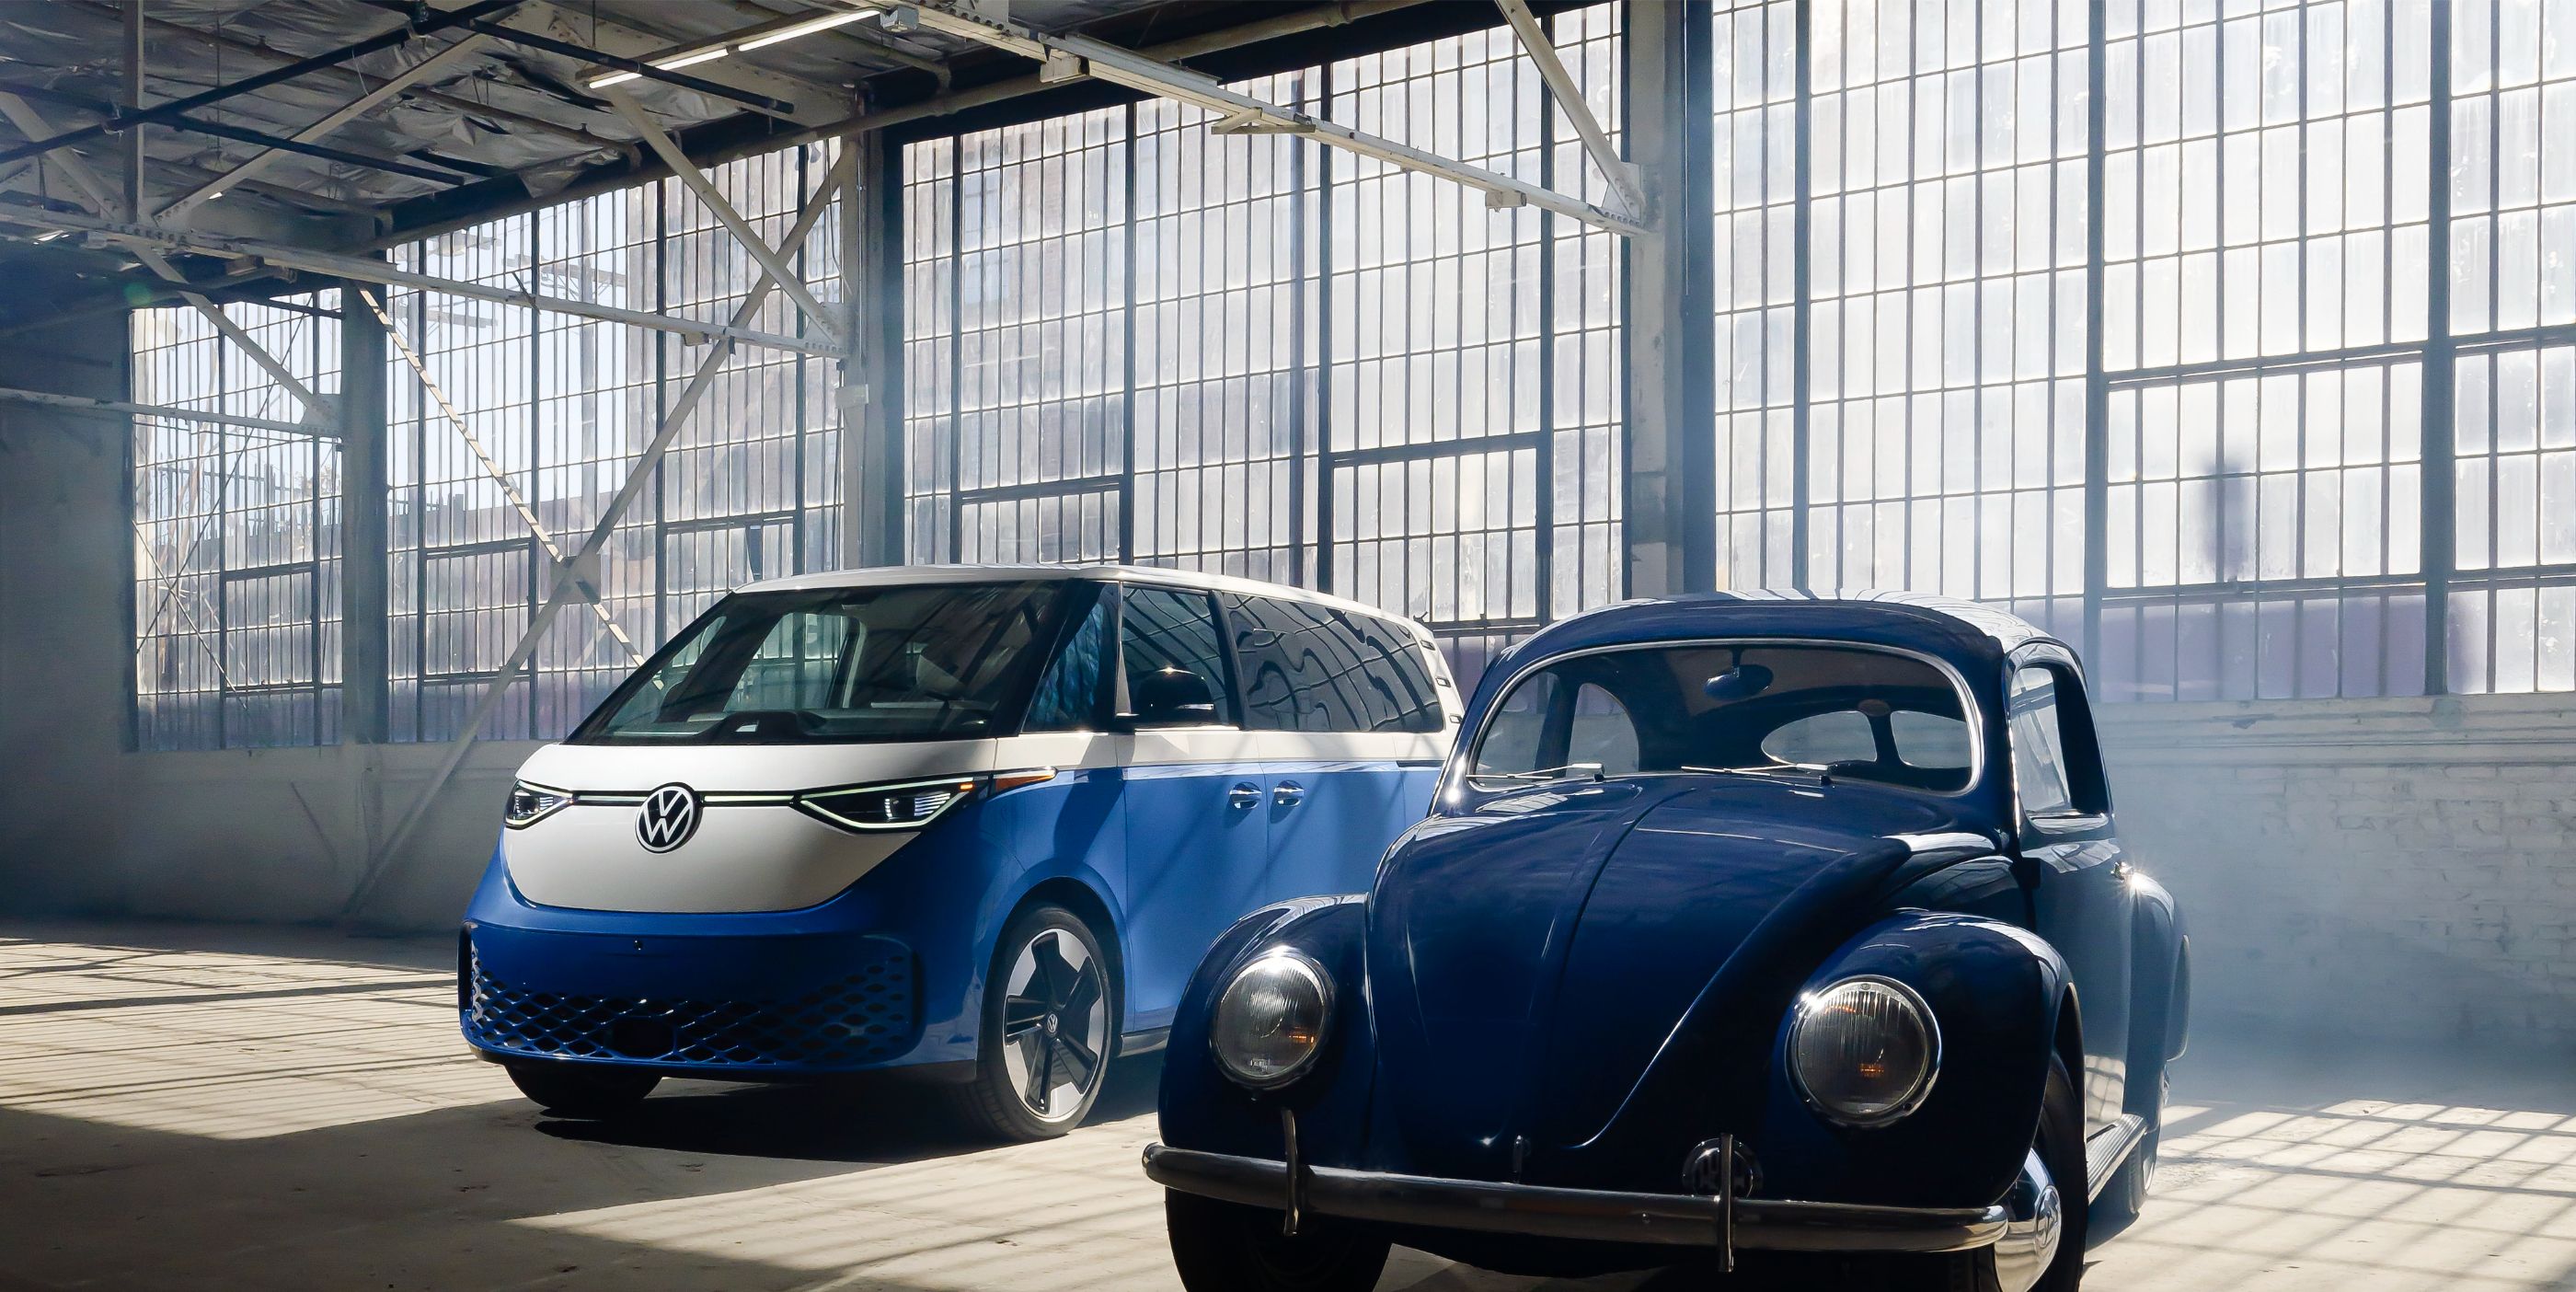 Volkswagen Celebrates 75 Years in America